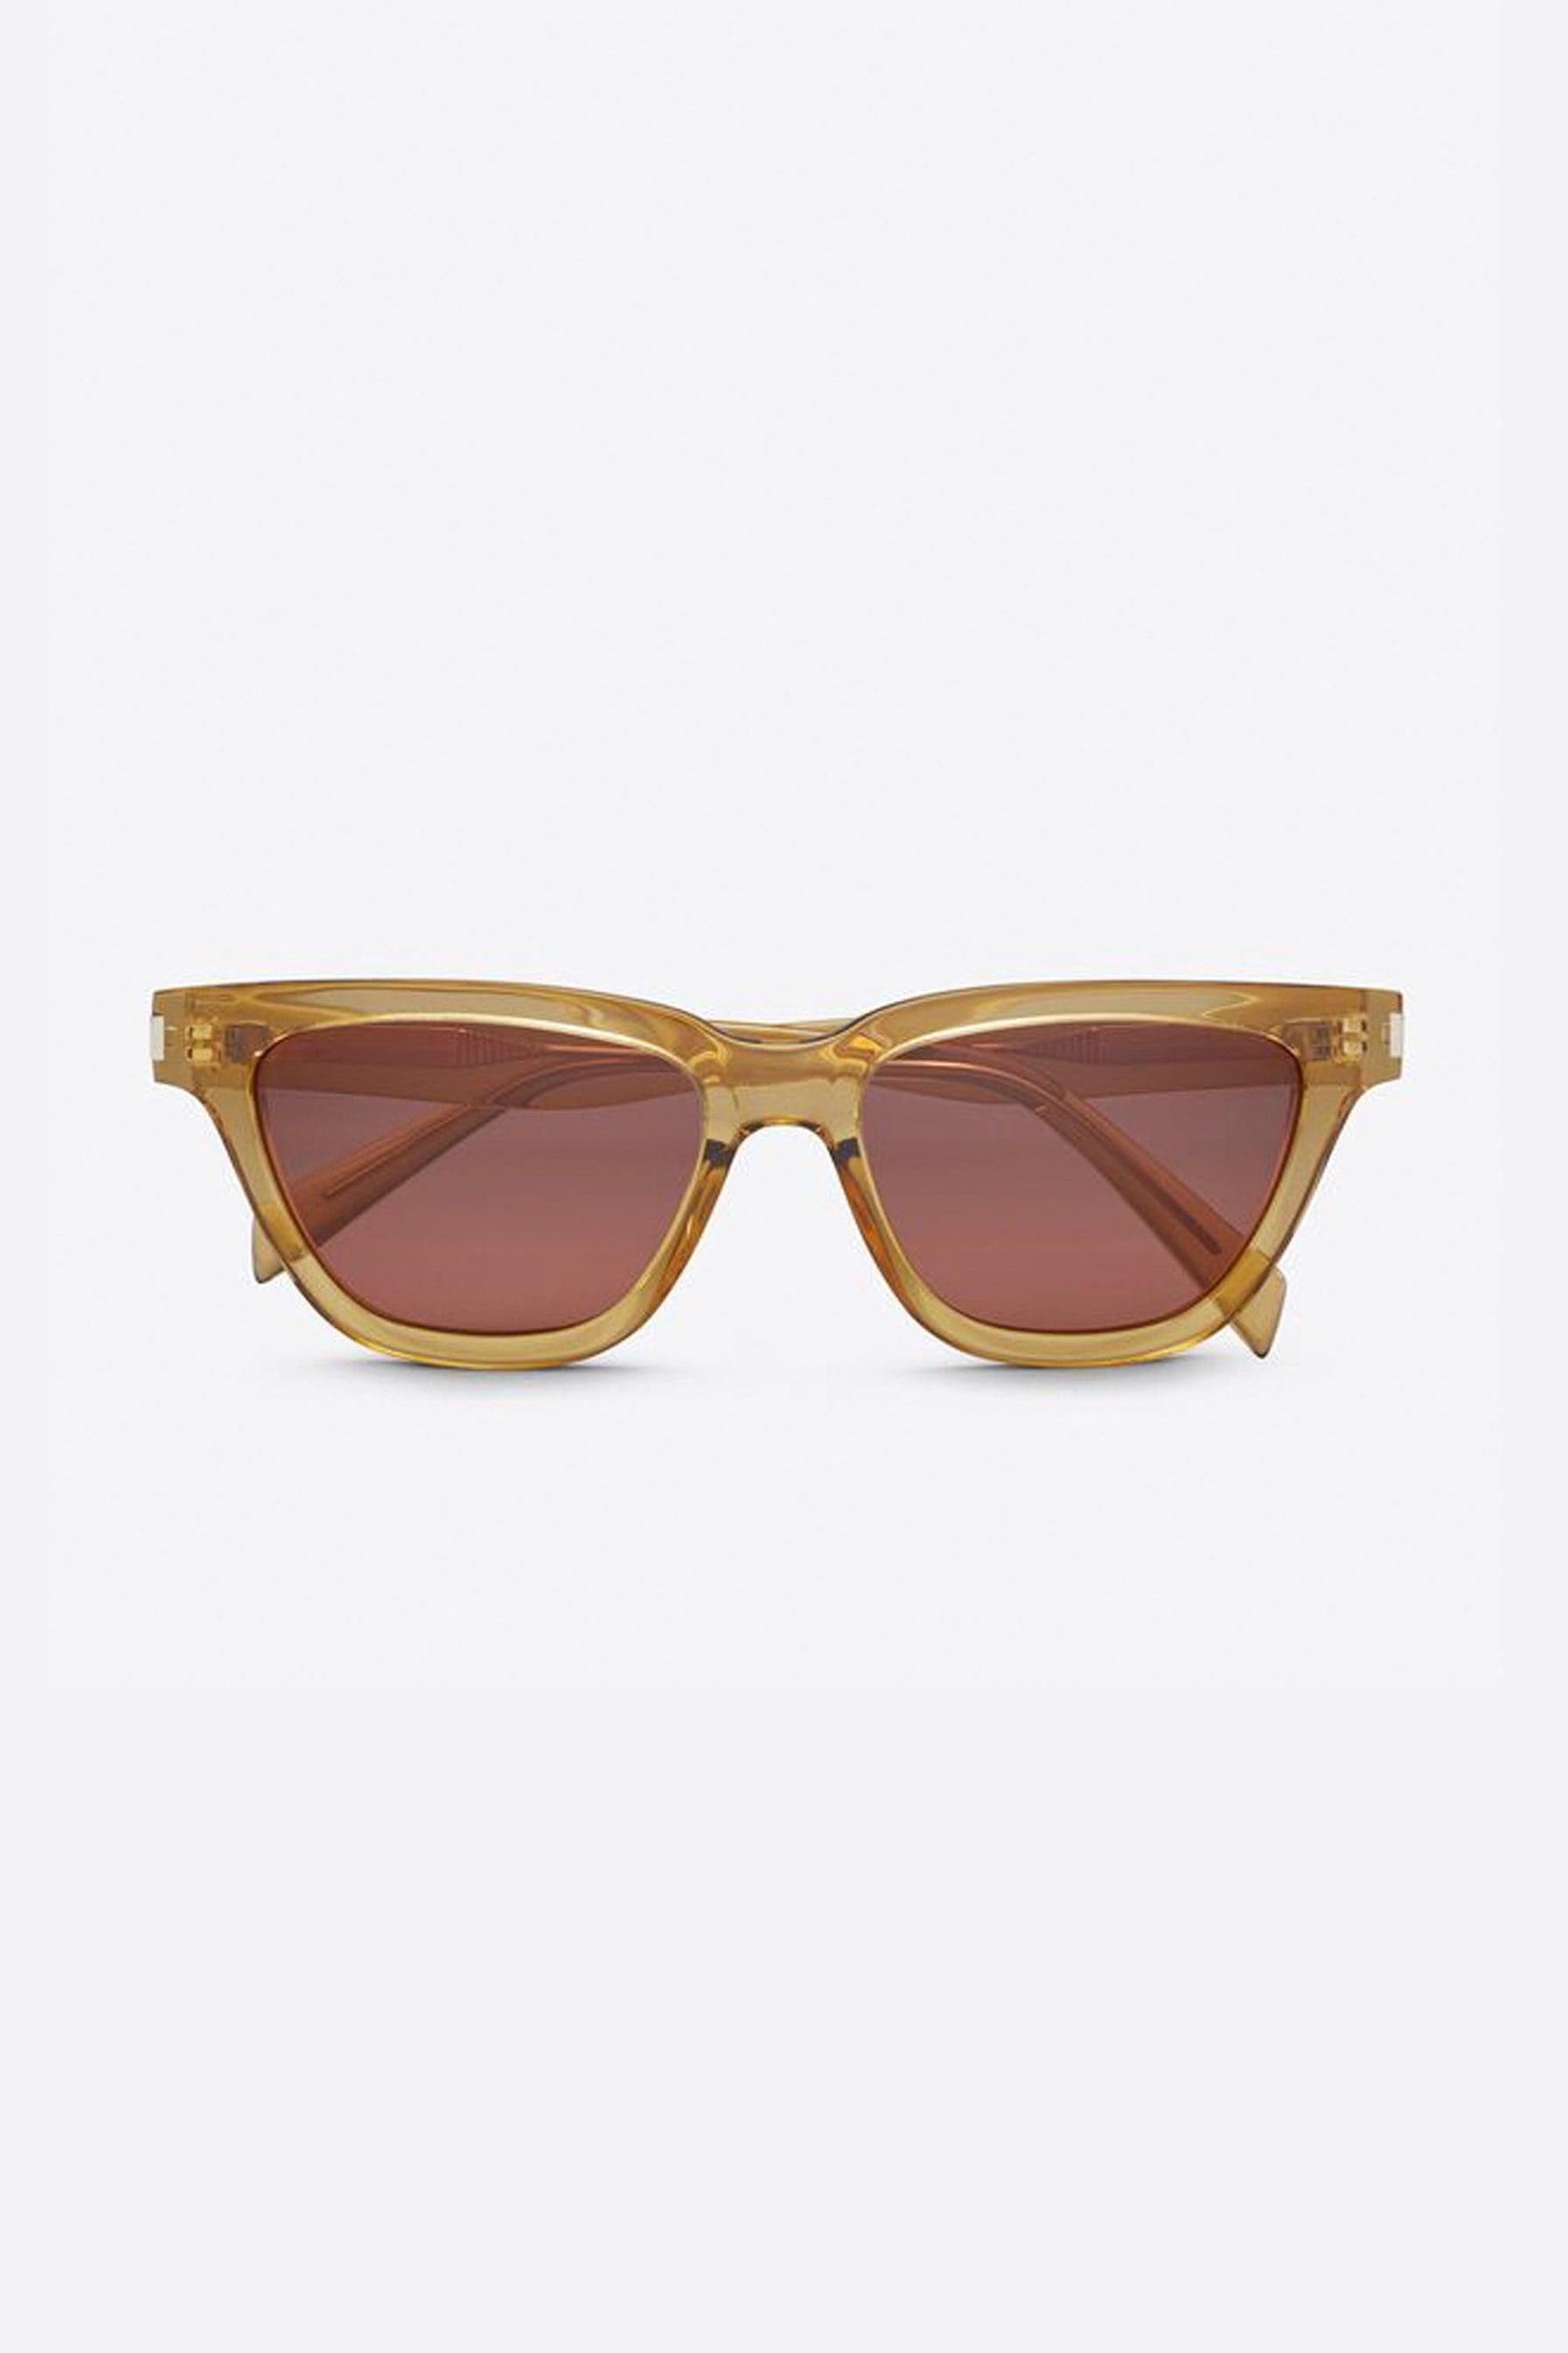 Saint Laurent angular SULPICE cat-eye UNISEX sunglasses with yellow lenses - Eyewear Club